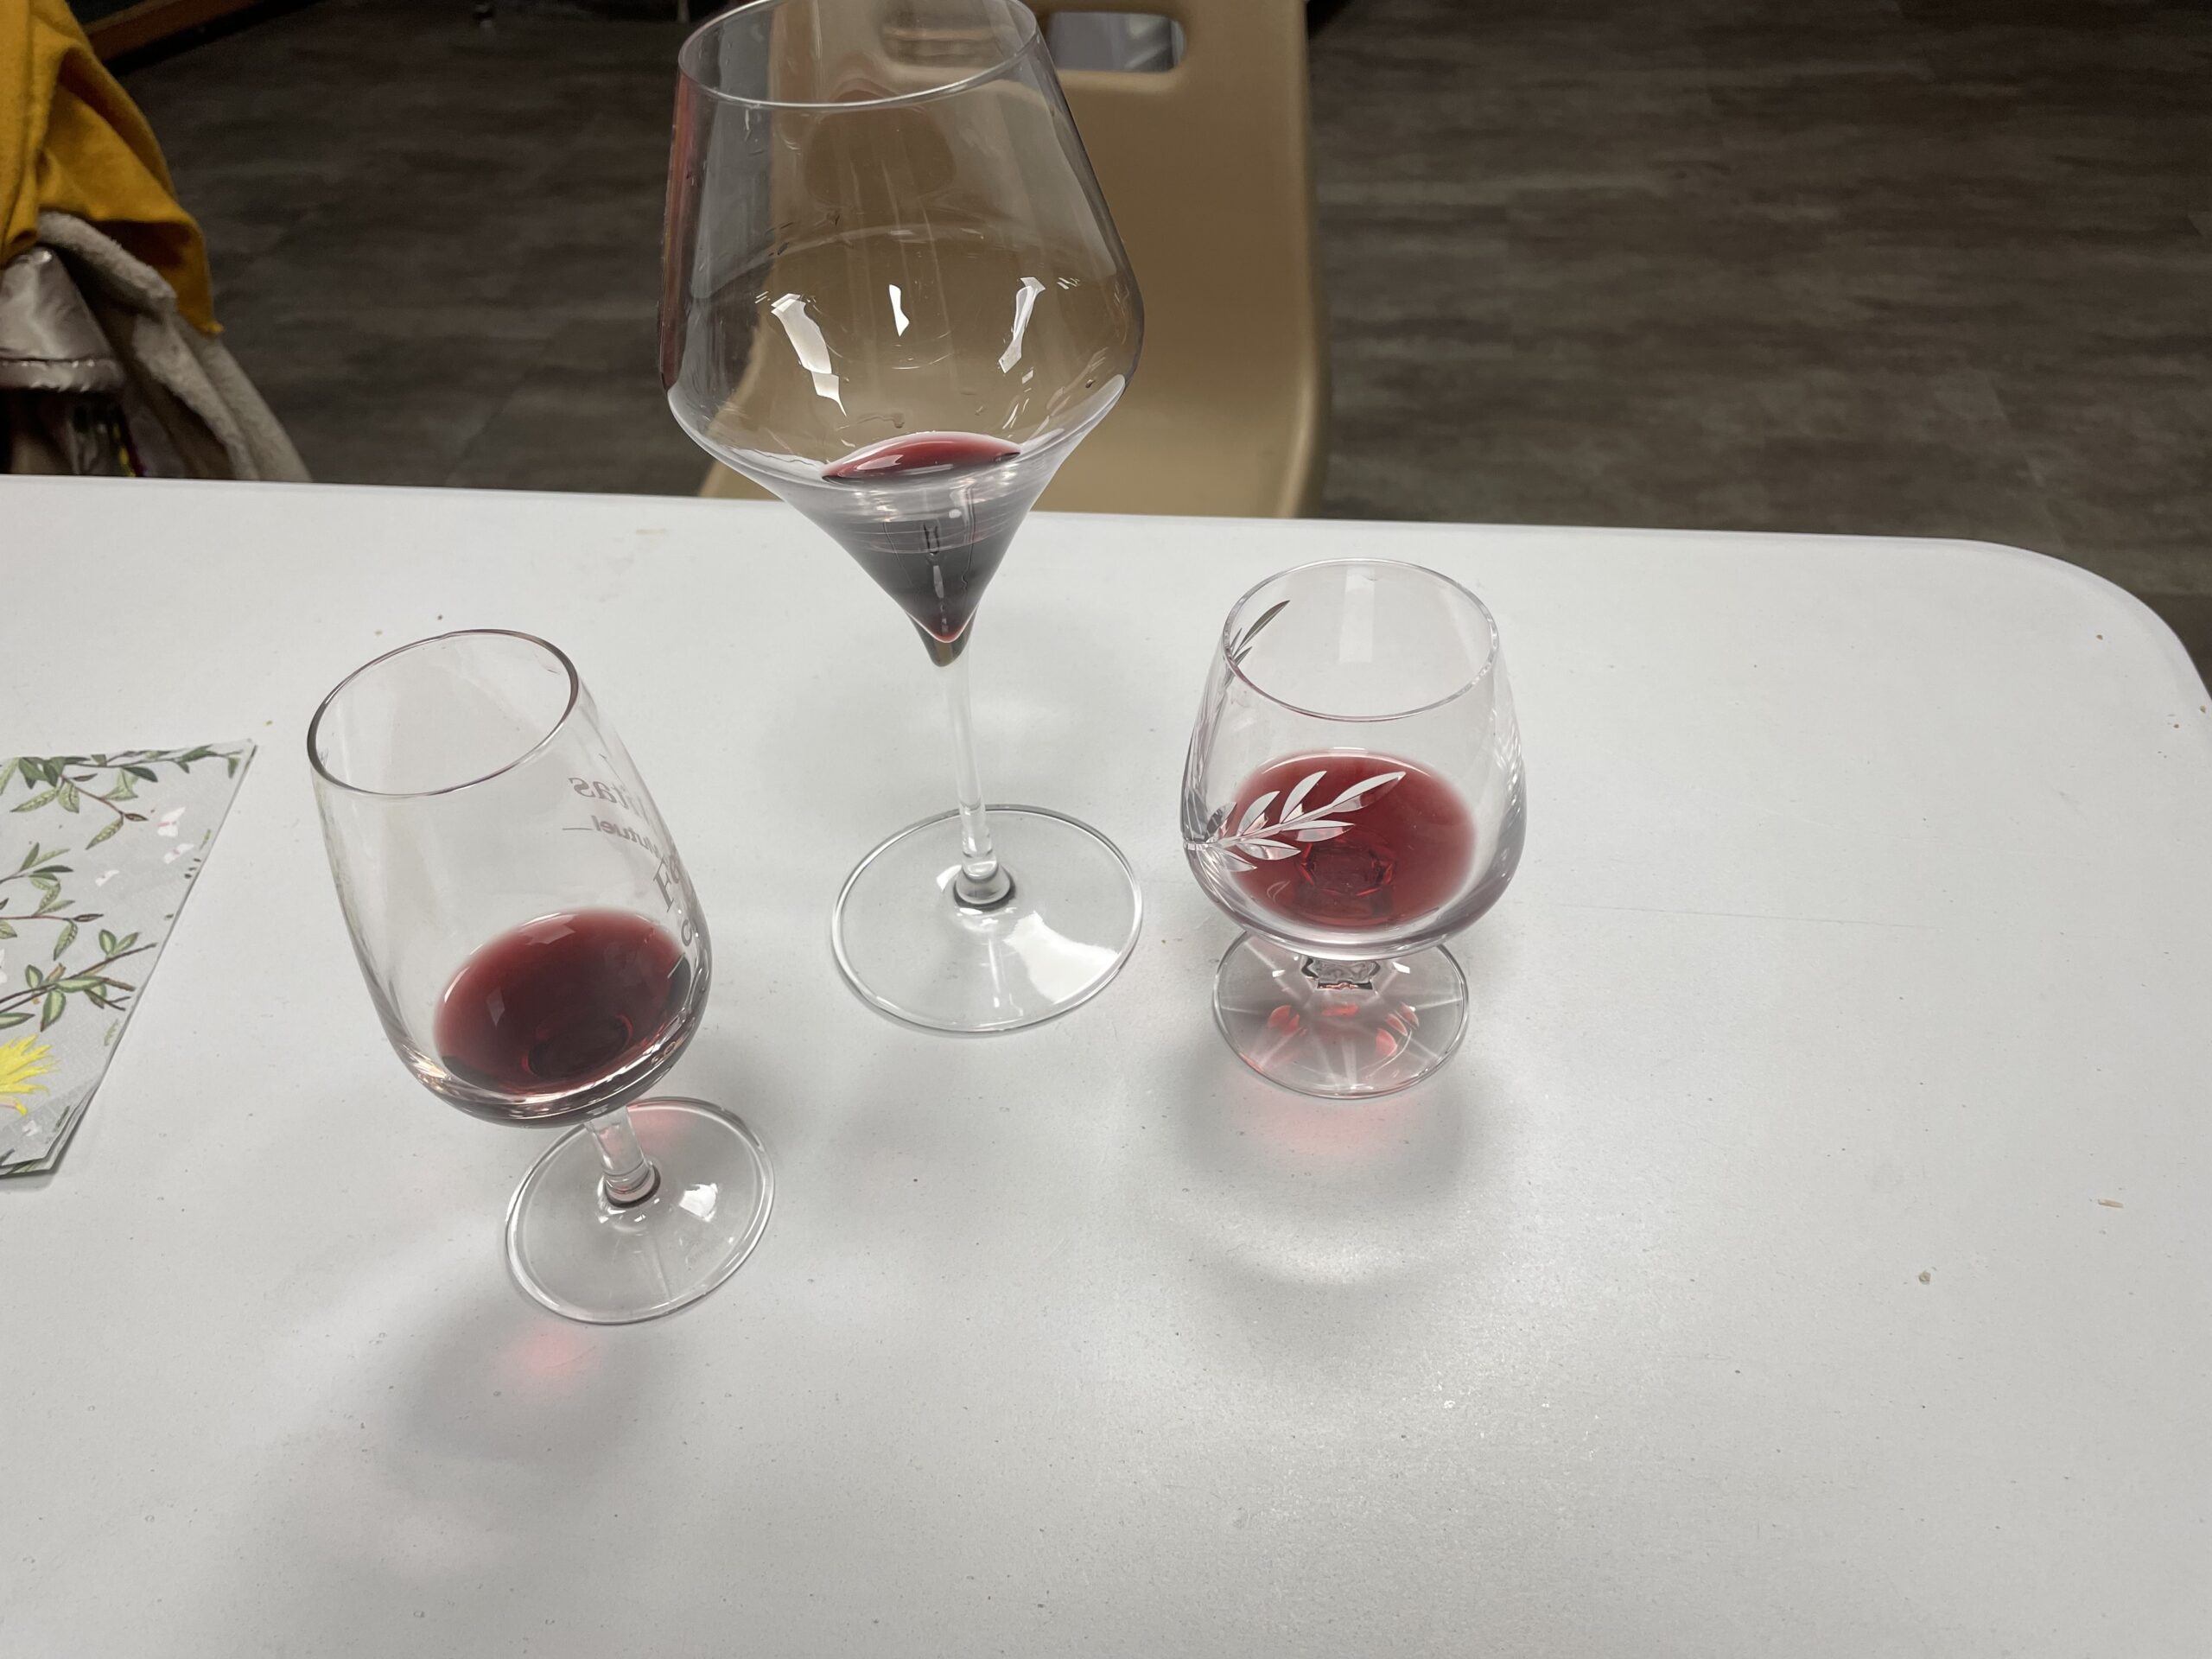 Three Glasses of Wine.